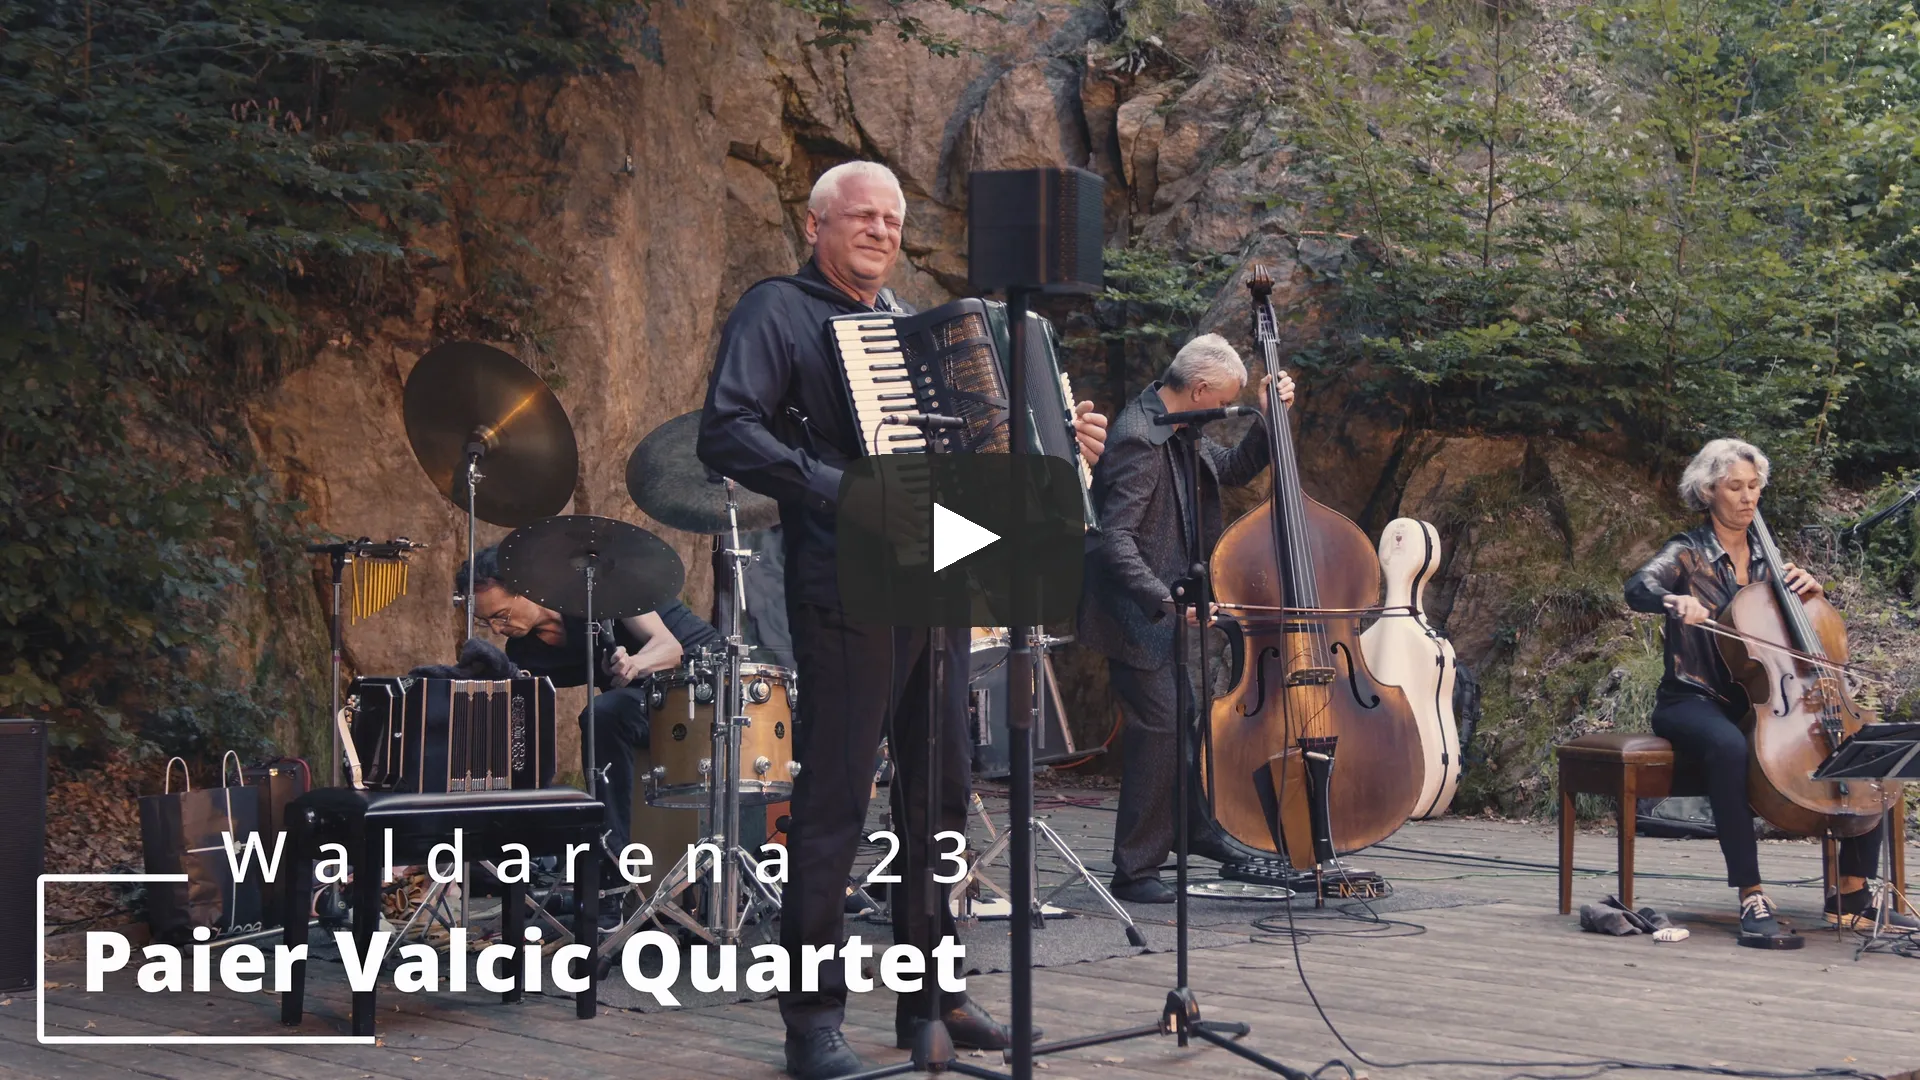 02. Aug 23 - Paier Valcic Quartet